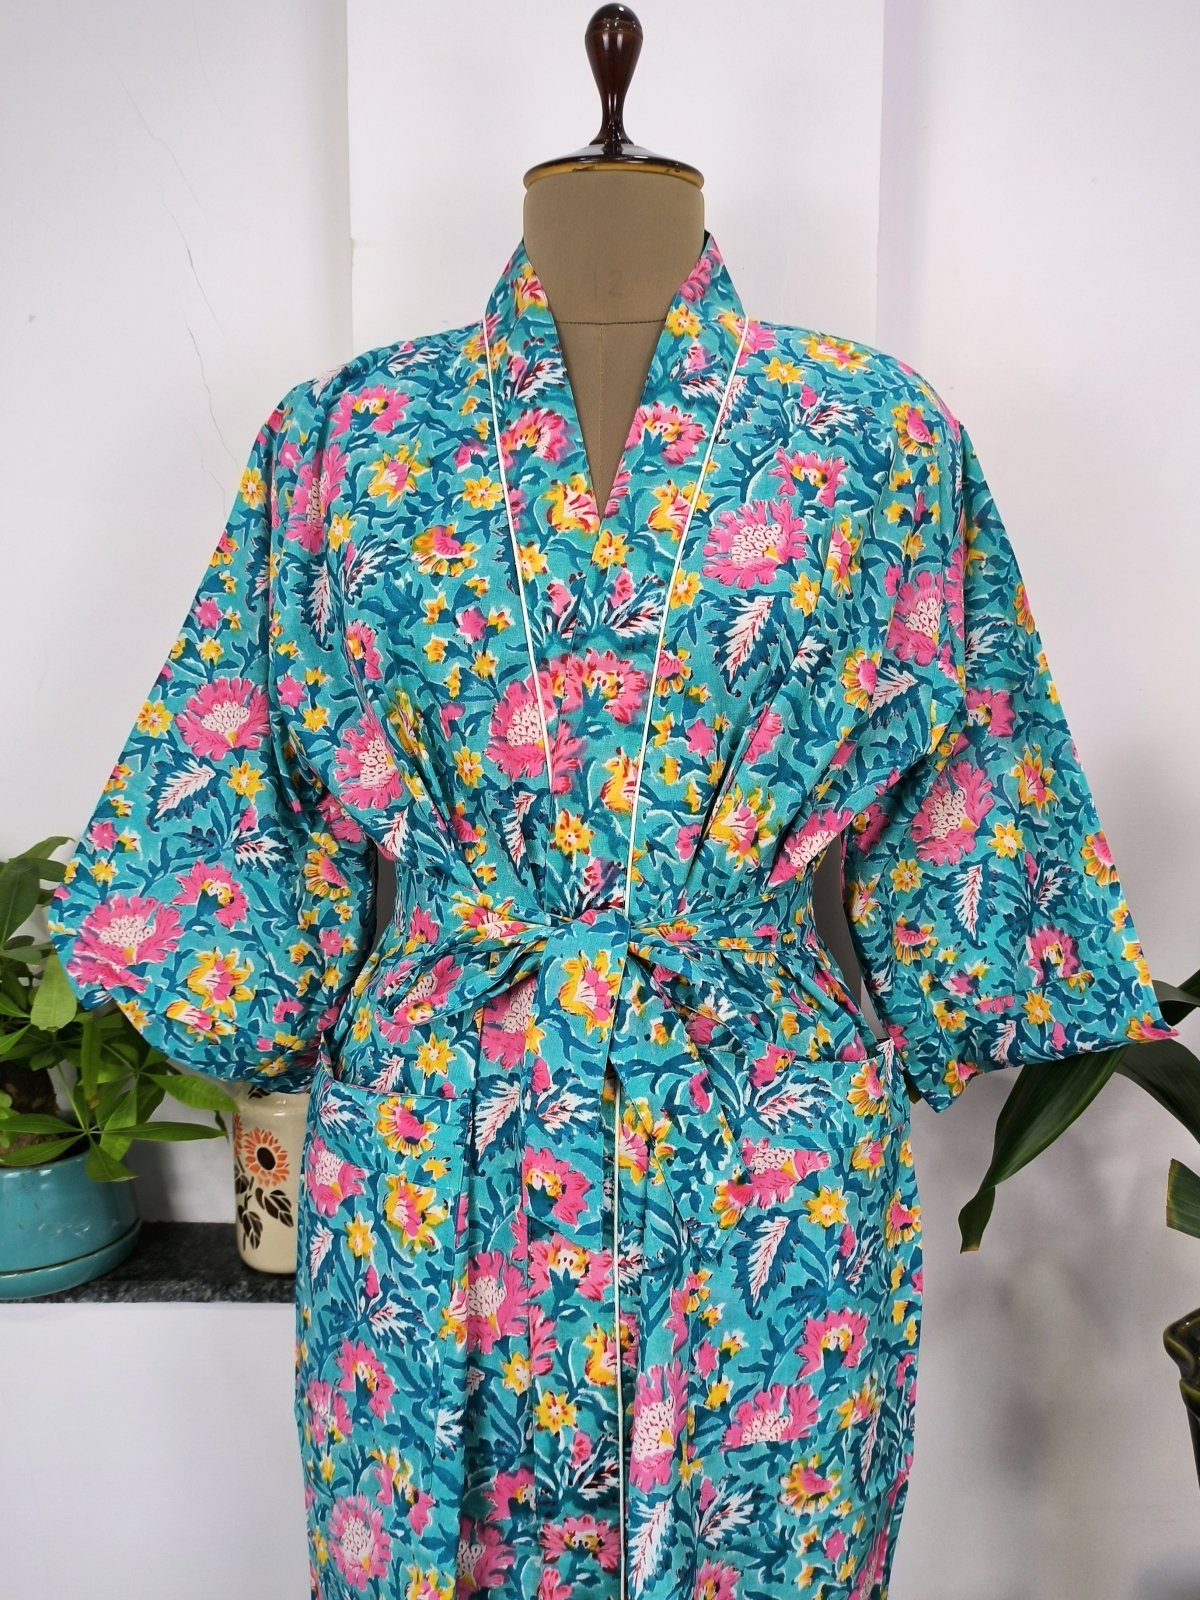 Pure Cotton Kimono Indian Handprinted Boho House Robe Summer Dress | Aqua Blue Aquatic Floral Marines Luxury Beach Holiday Yacht Cover Up - The Eastern Loom